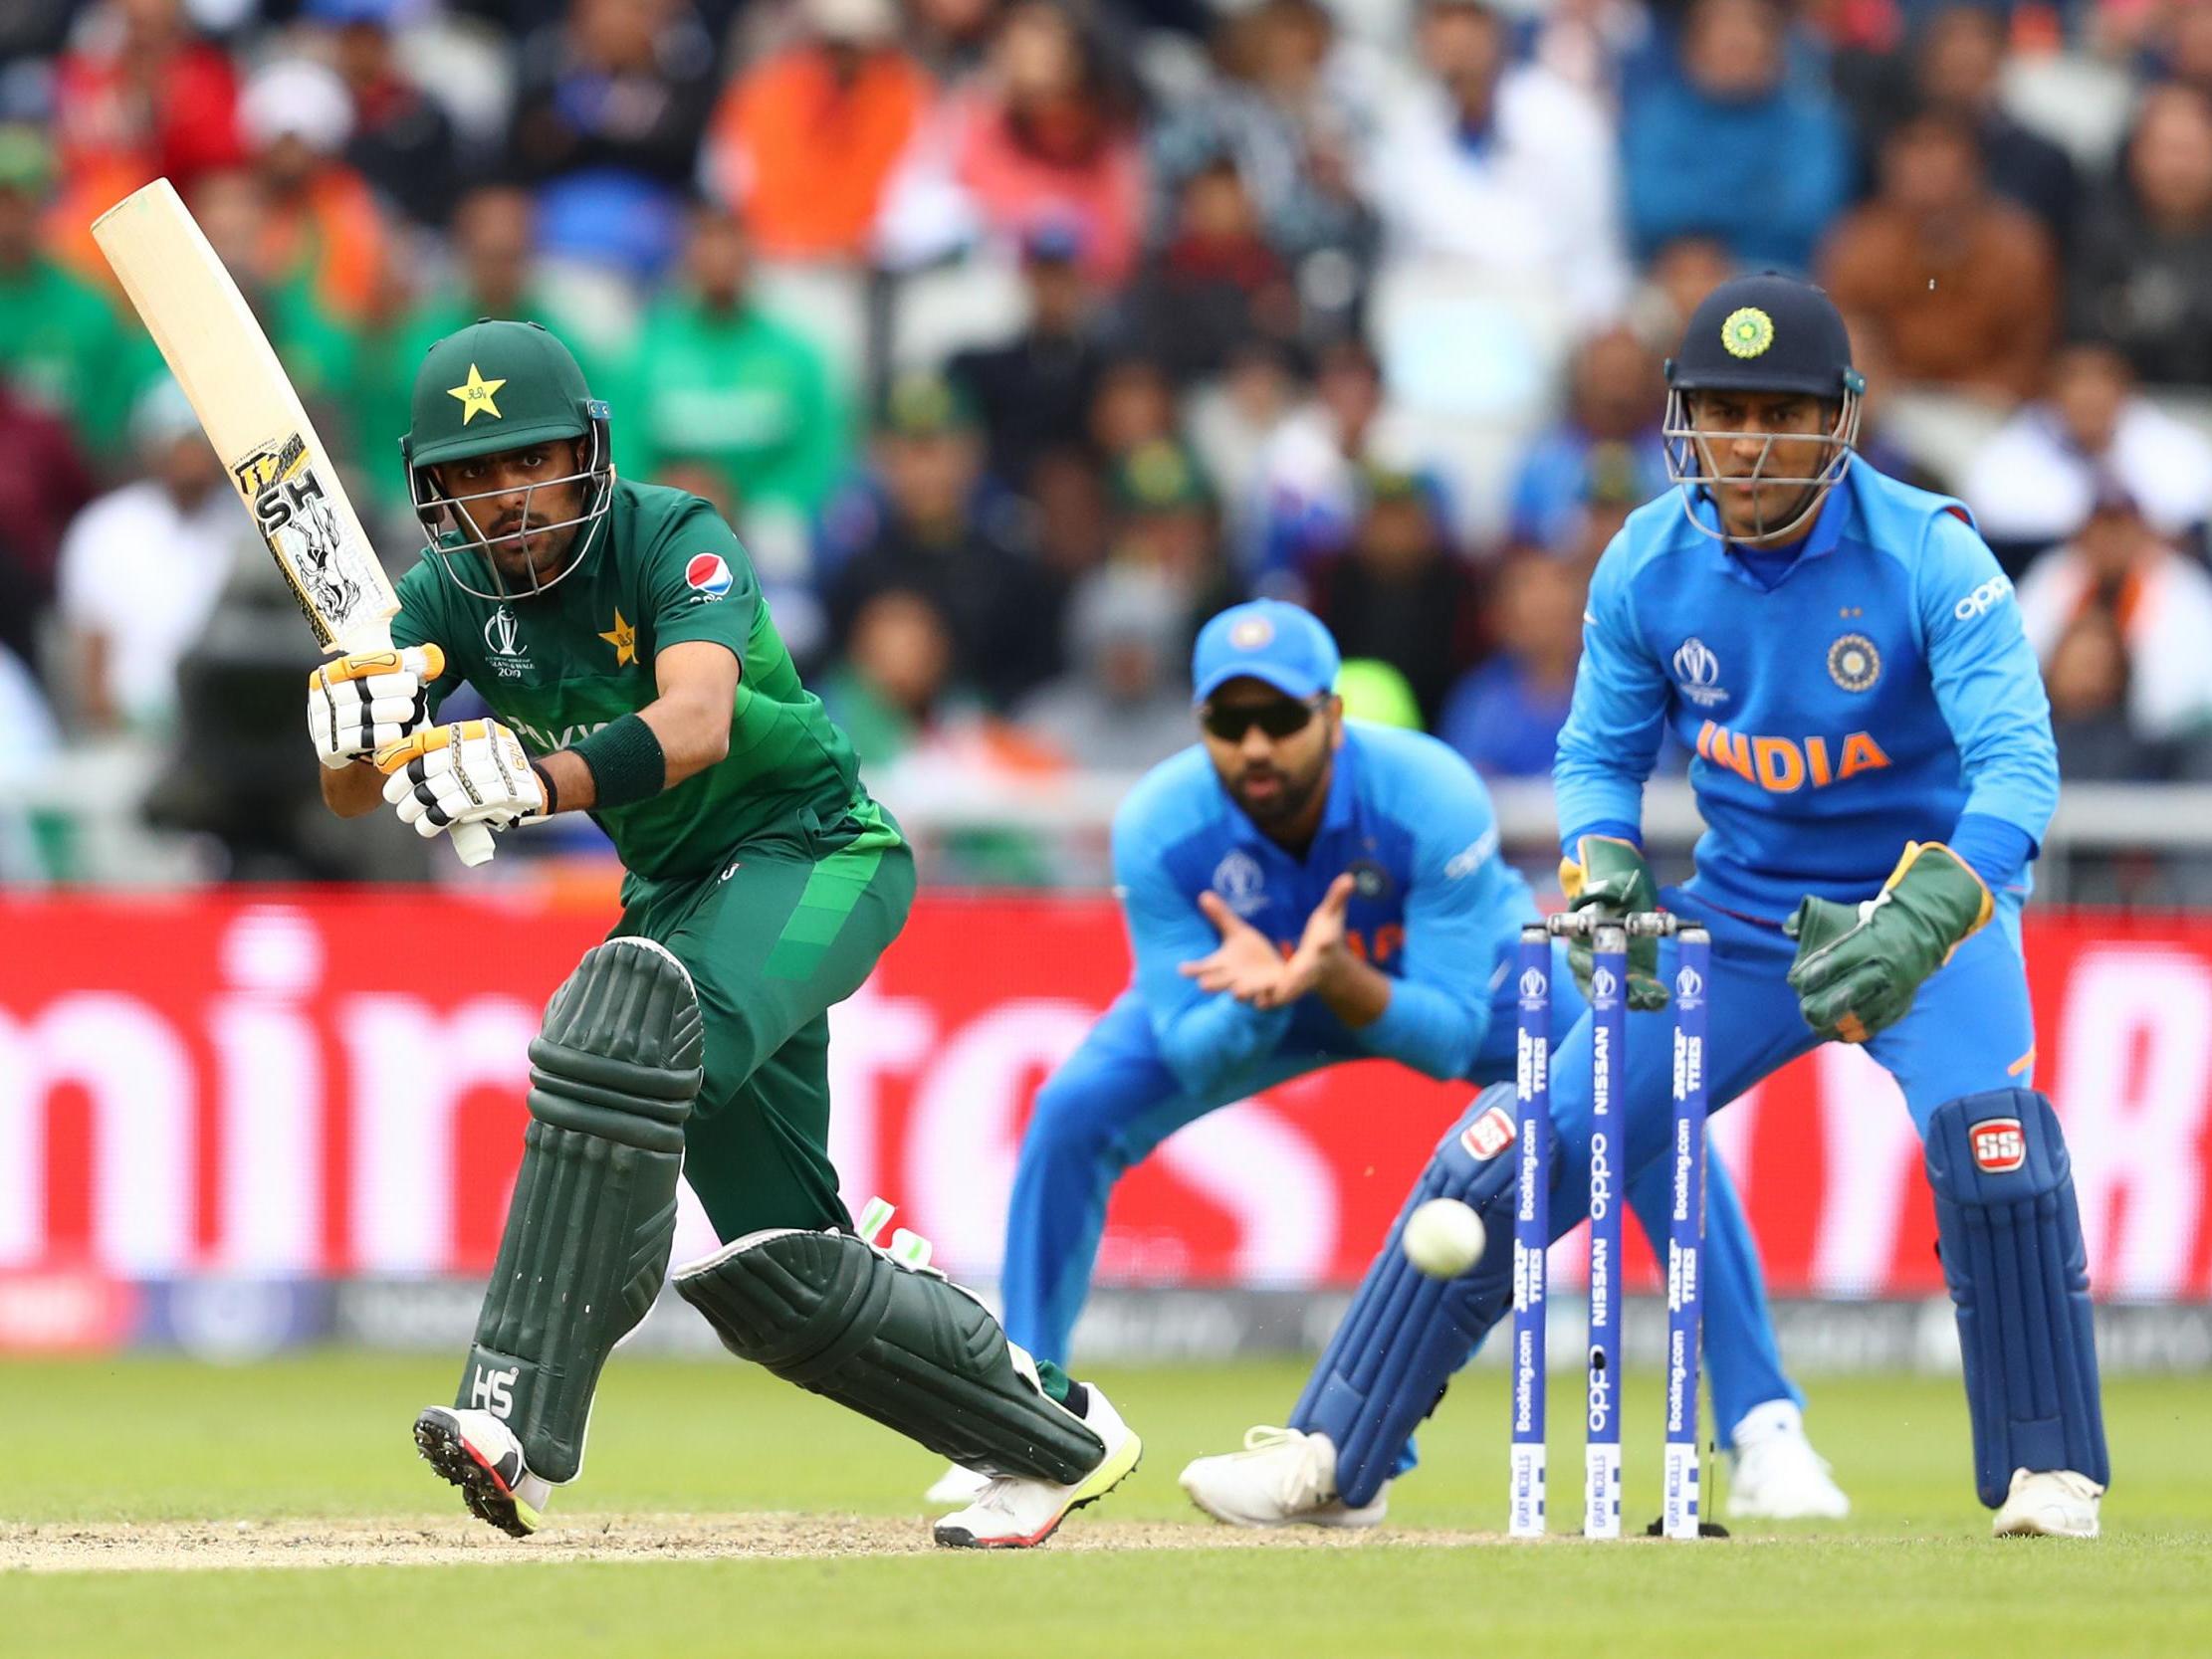 India vs Pakistan, Cricket World Cup 2019 Virat Kohli's men win by 89